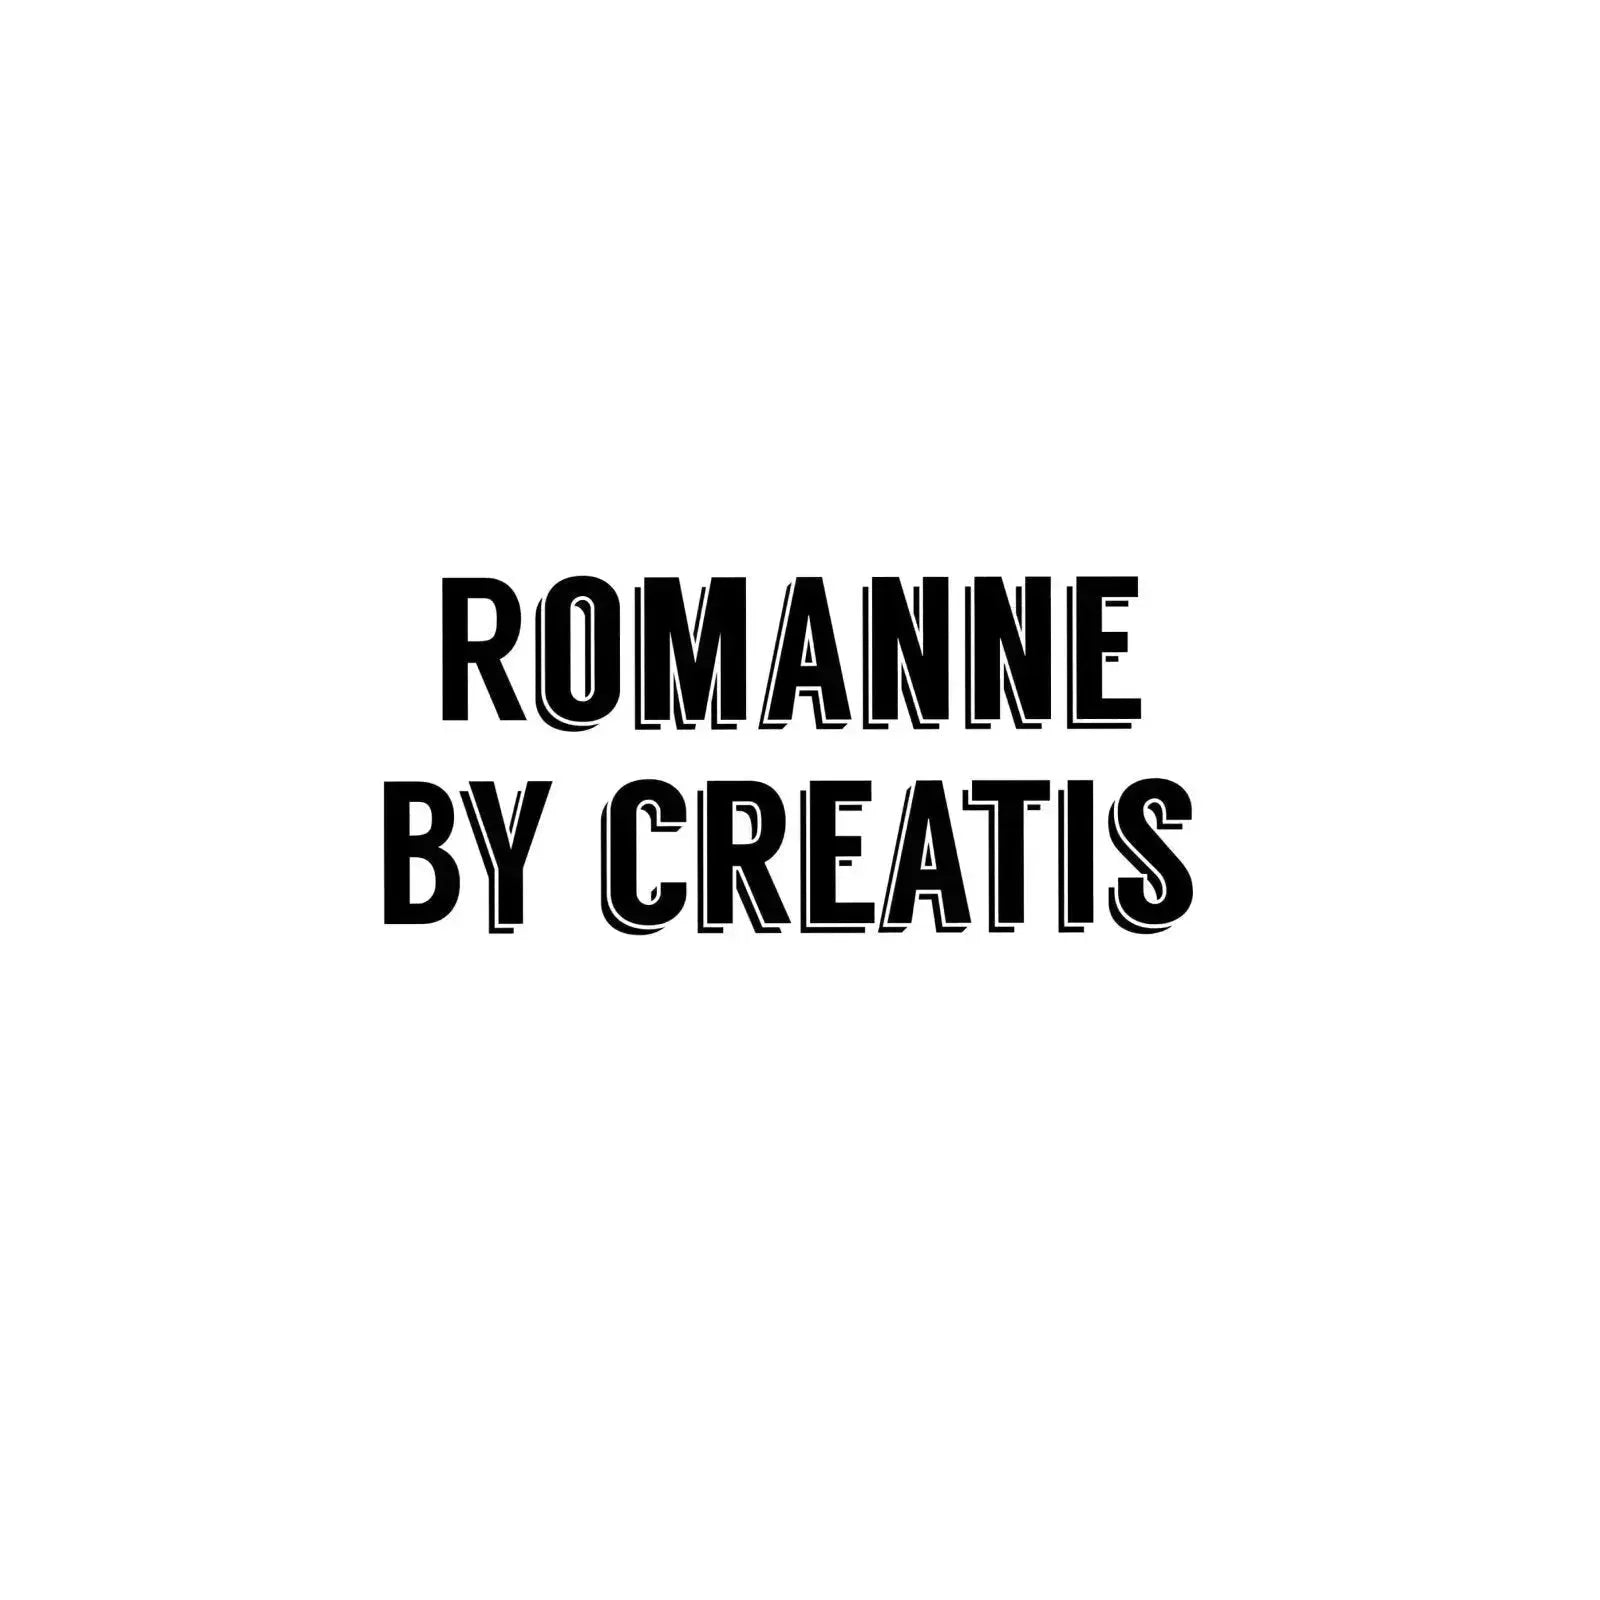 ROMANNE BY CREATIS